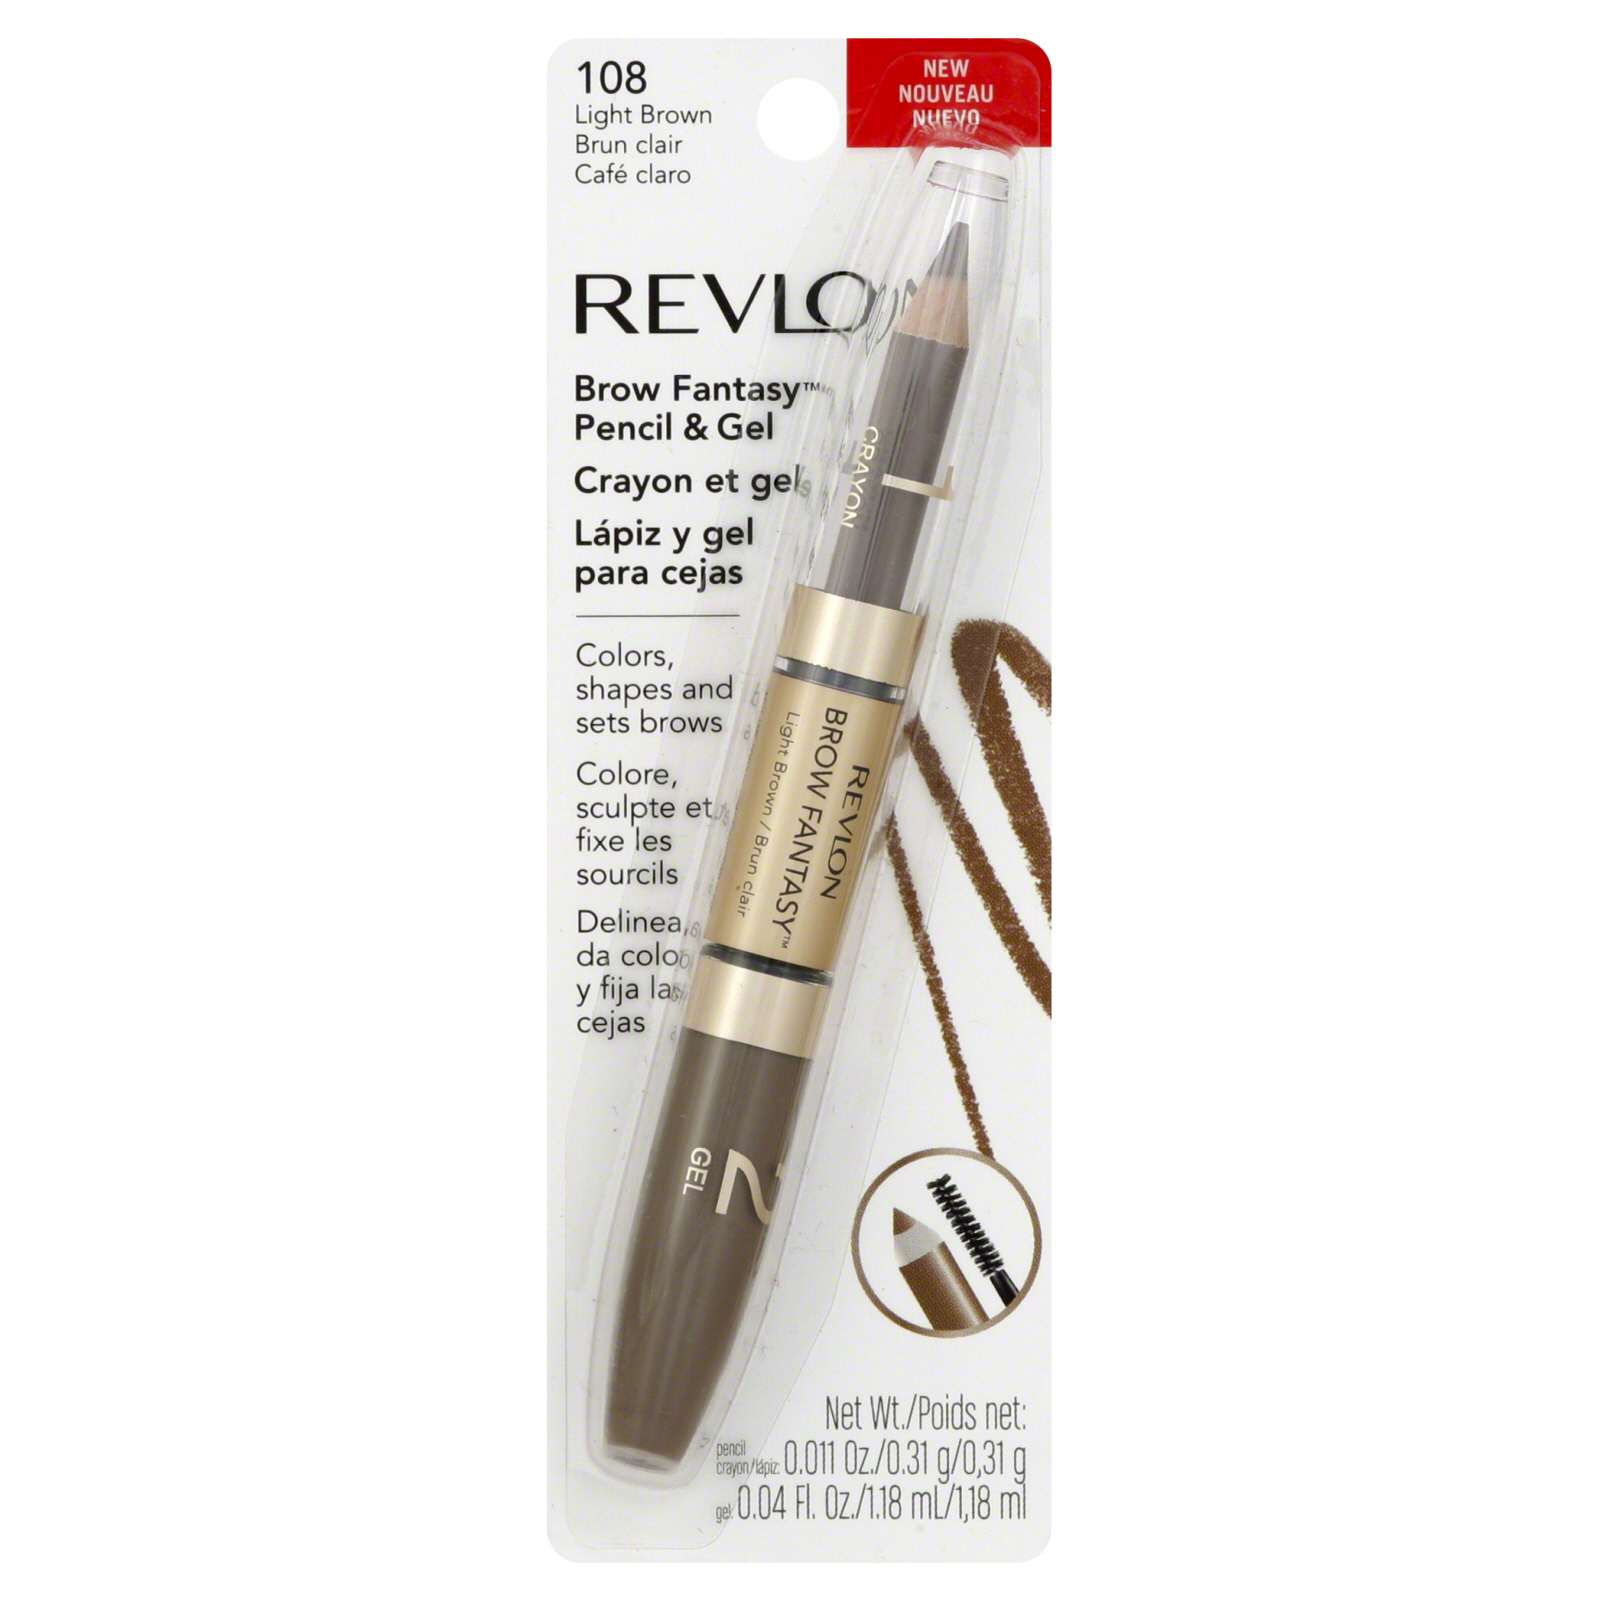 Revlon Brow Fantasy Pencil & Gel, Light Brown